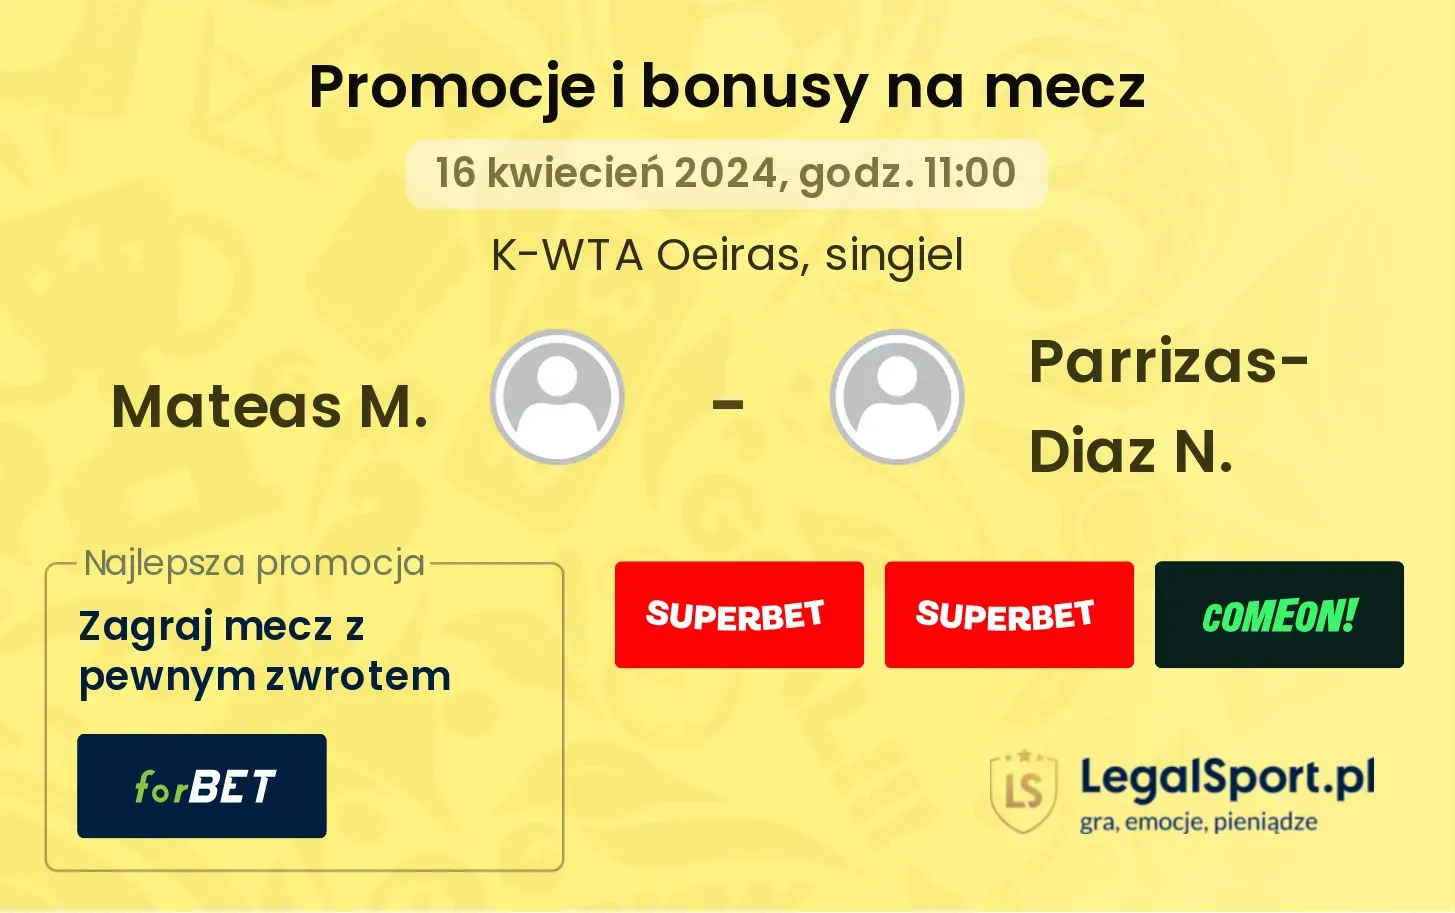 Mateas M. - Parrizas-Diaz N. promocje bonusy na mecz